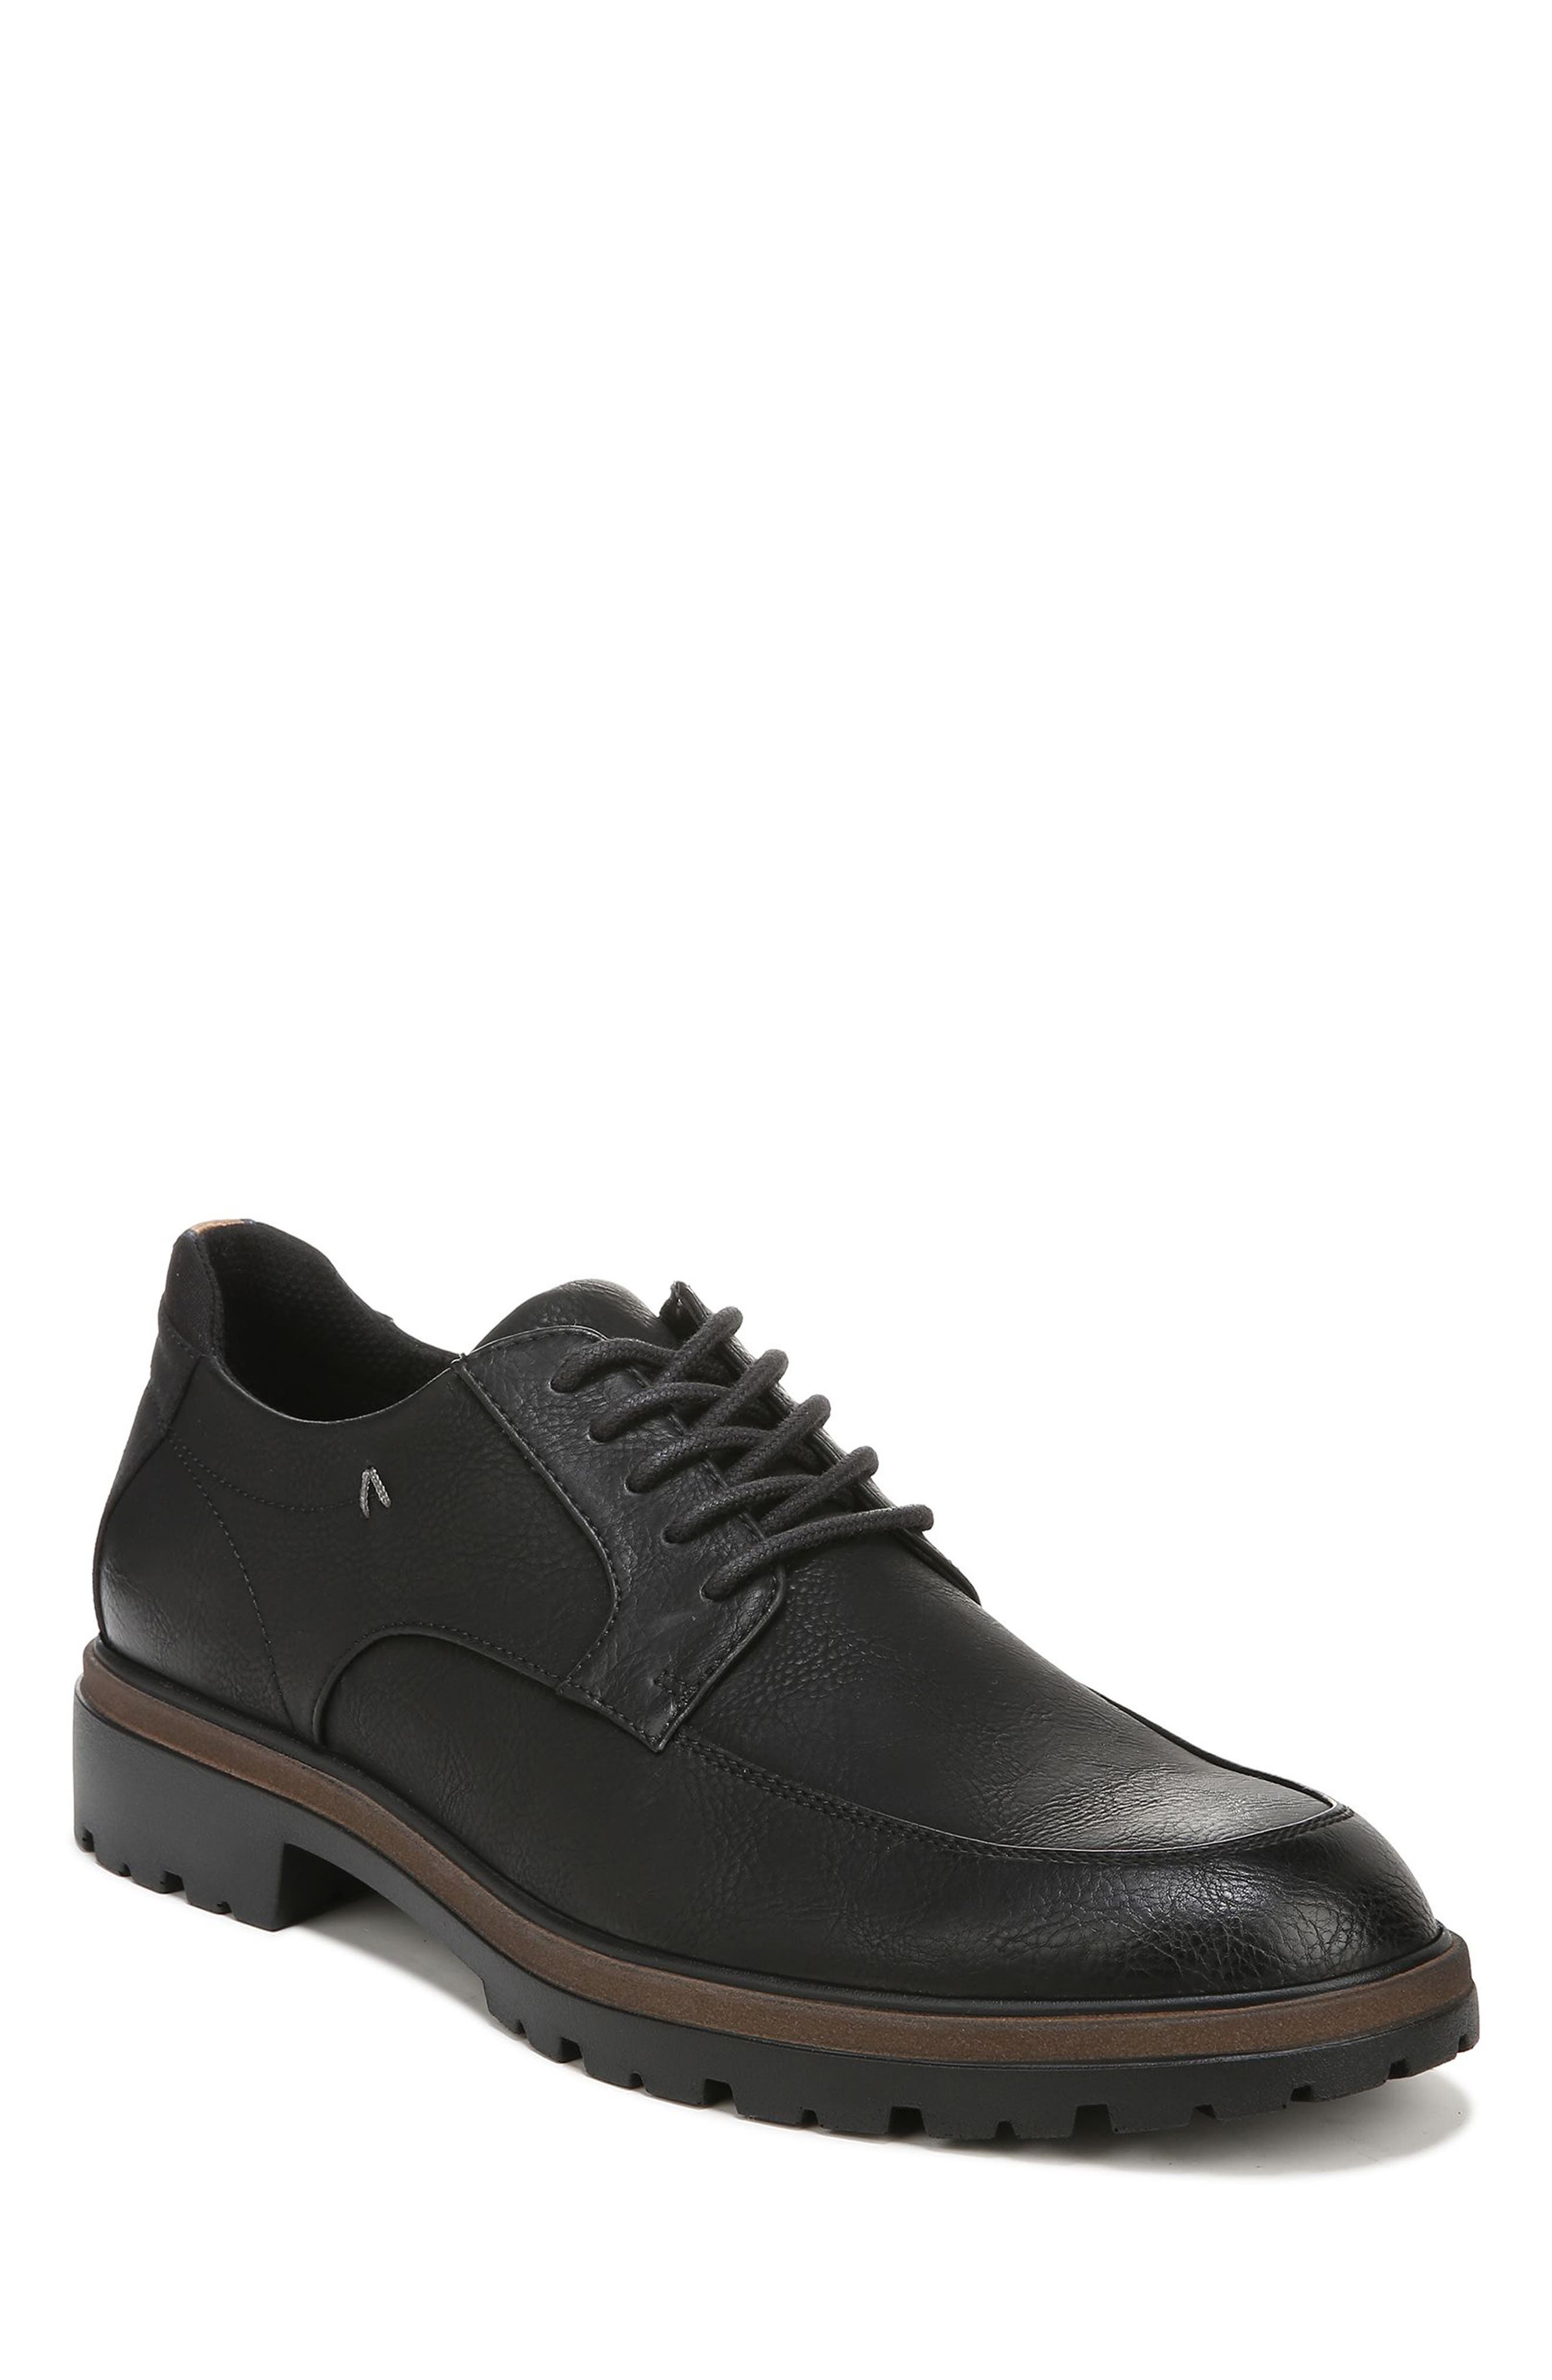 F4060 sneaker uomo blu/grey SCHOLL STARLIT scarpe tissue/leather shoe man 